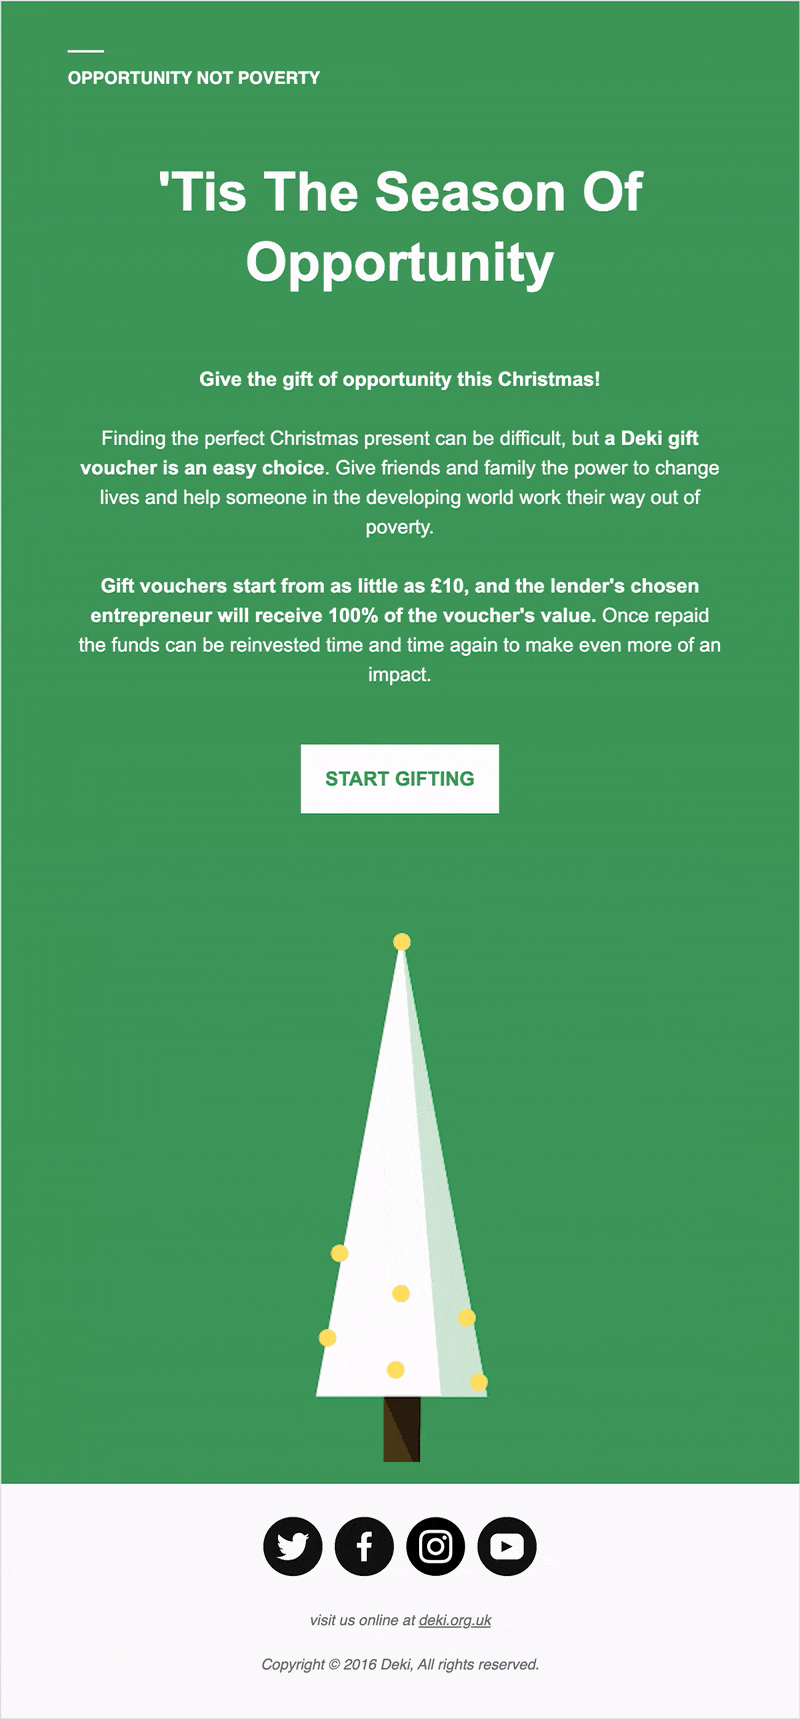 Deki Christmas newsletter example with green background